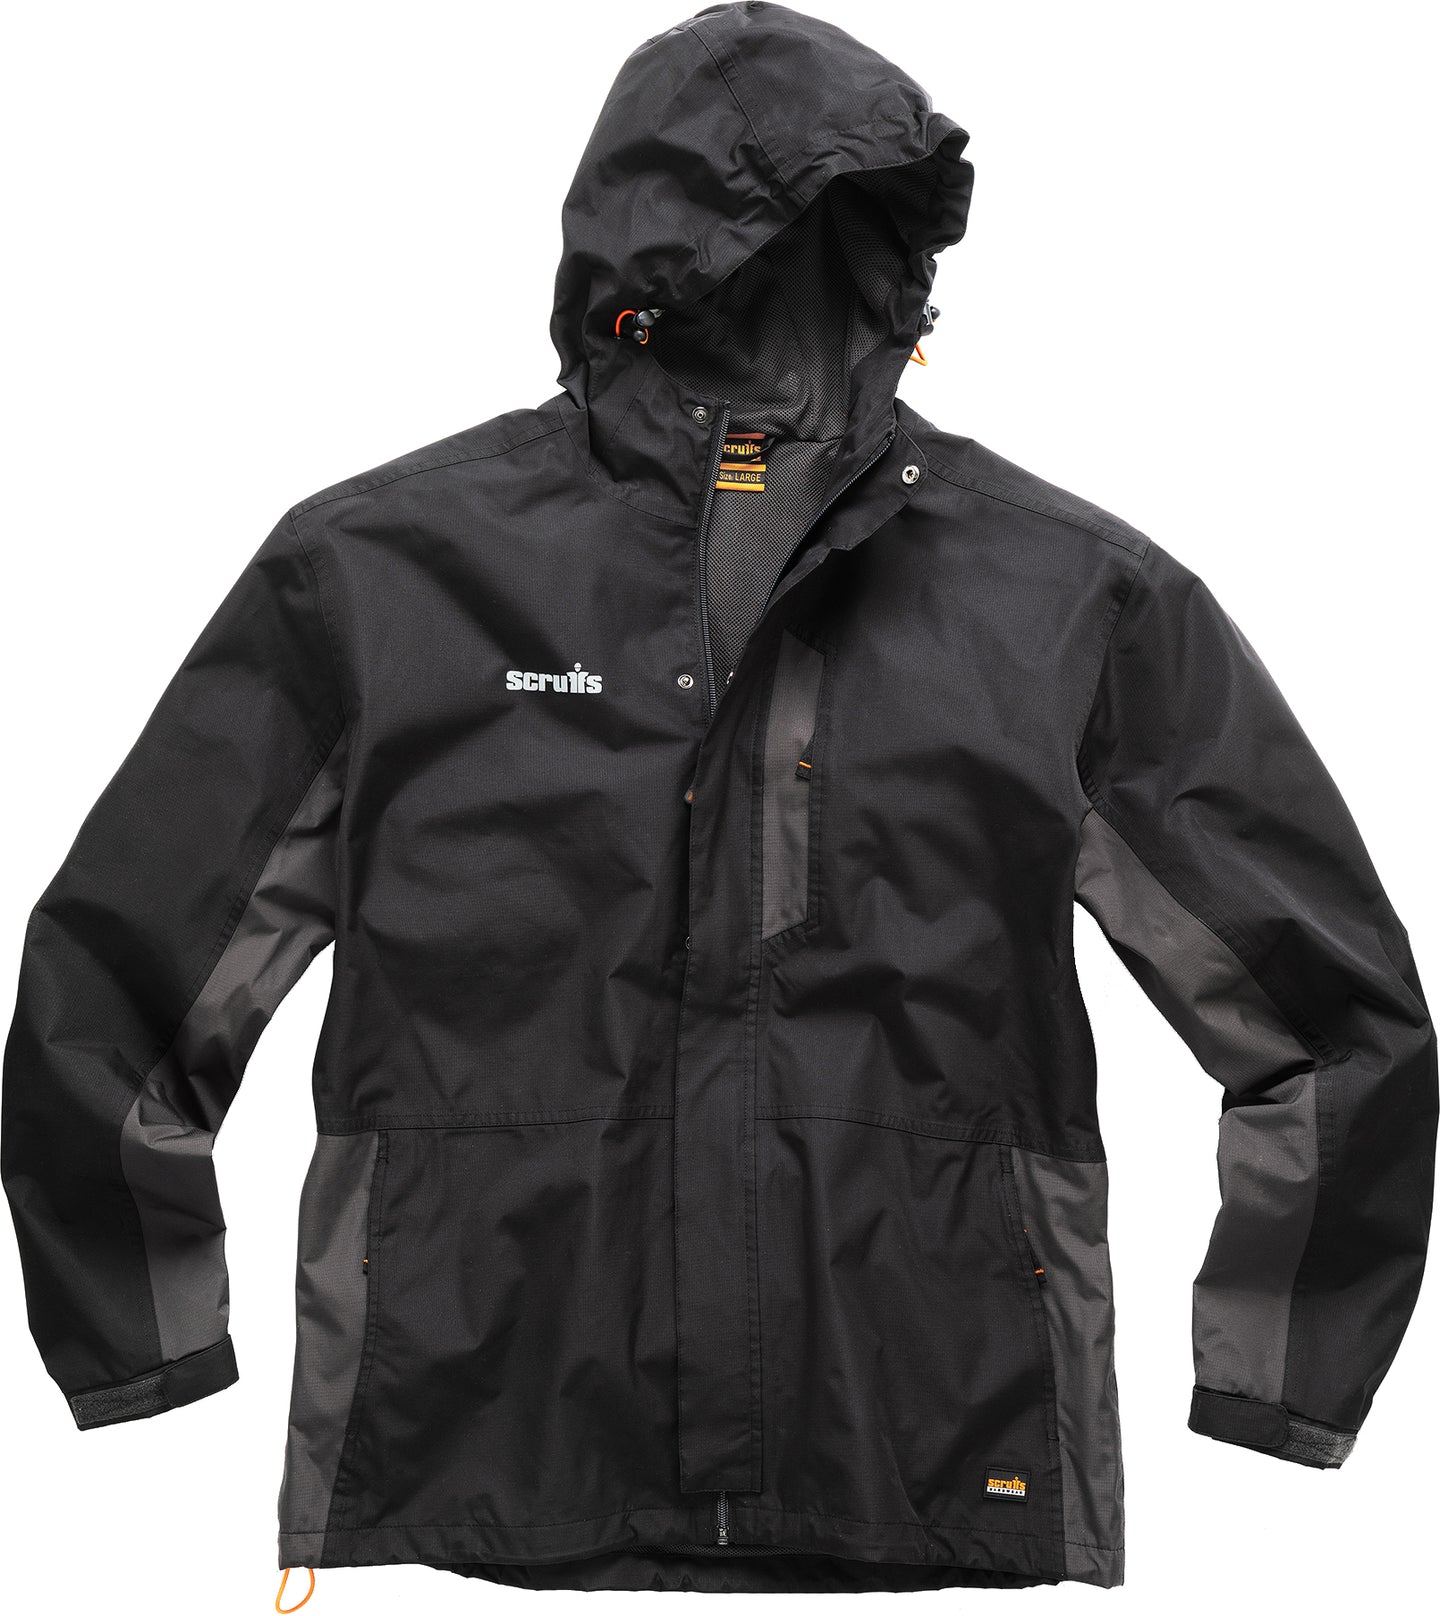 SCRUFFS Worker Jacket - Black/Graphite - Size Small